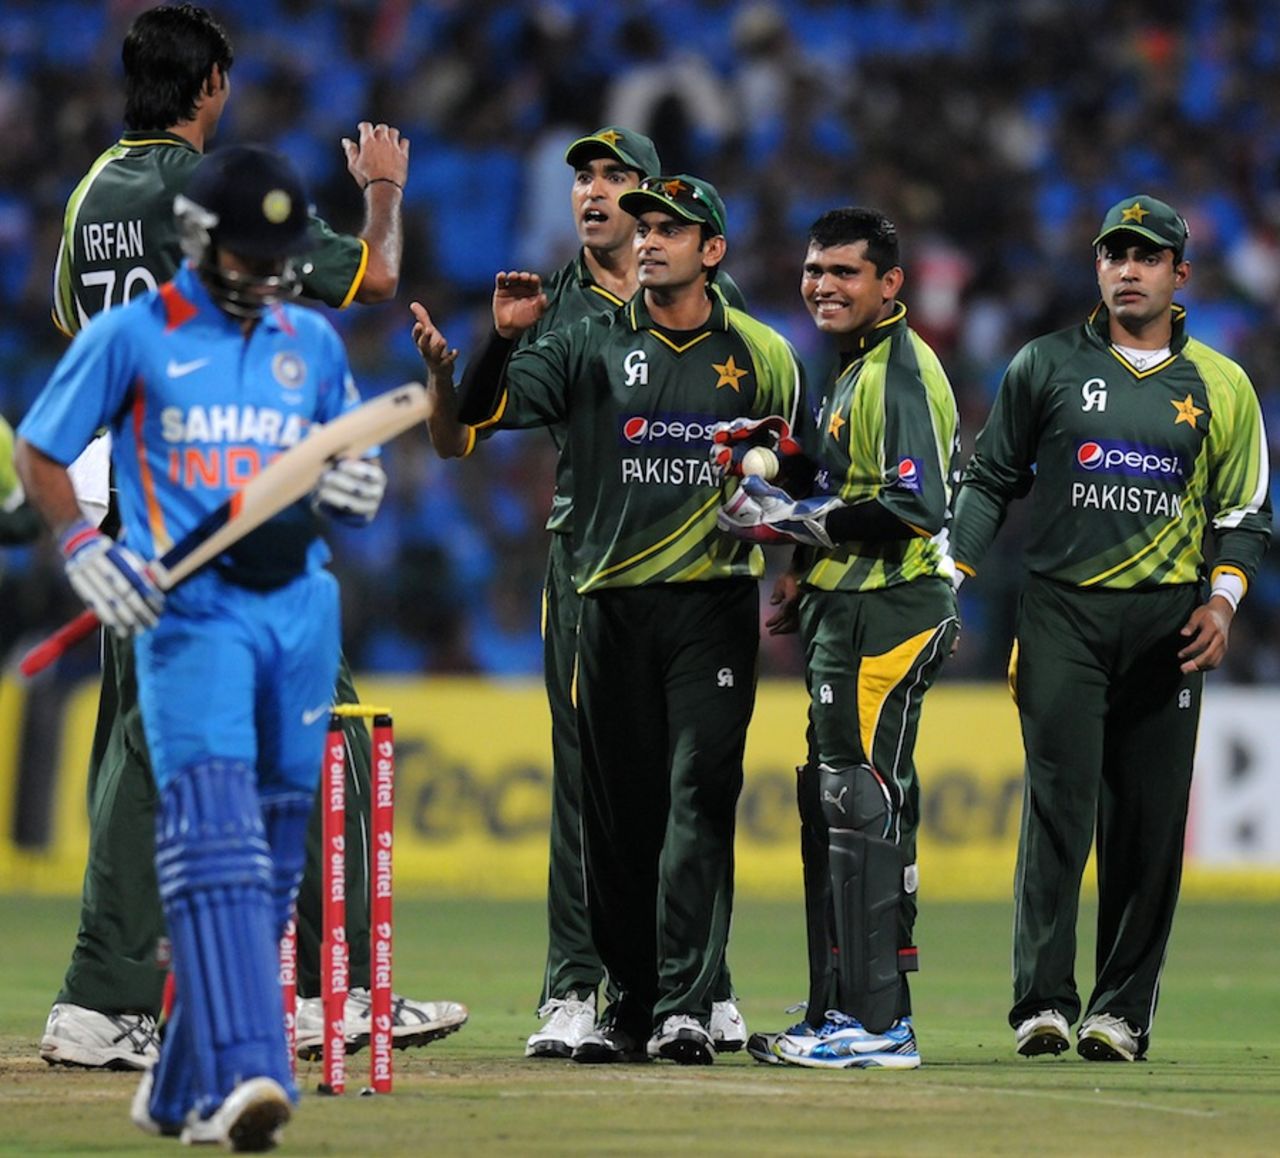 Mohammad Irfan picked up the key wicket of Virat Kohli, India v Pakistan, 1st T20, Bangalore, December 25, 2012